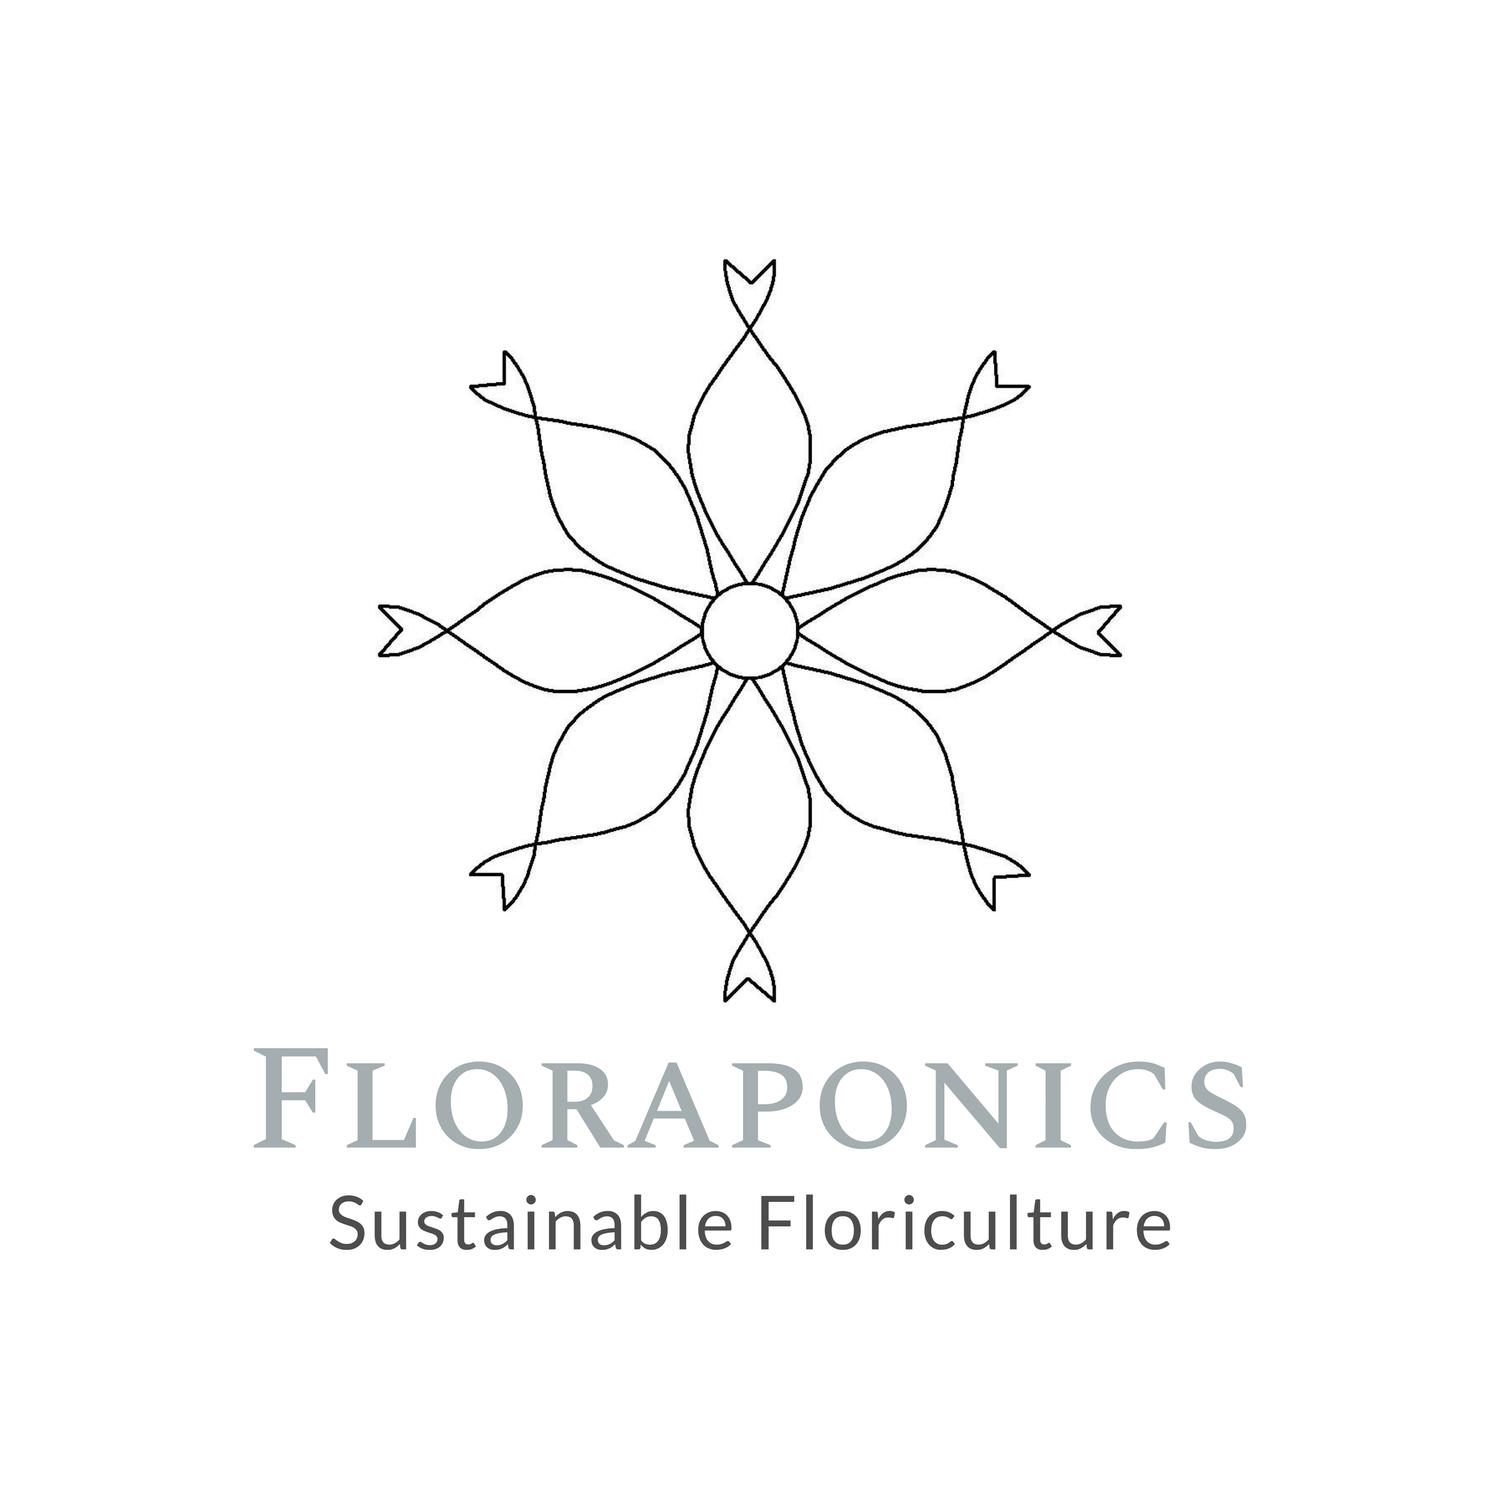 Floraponics